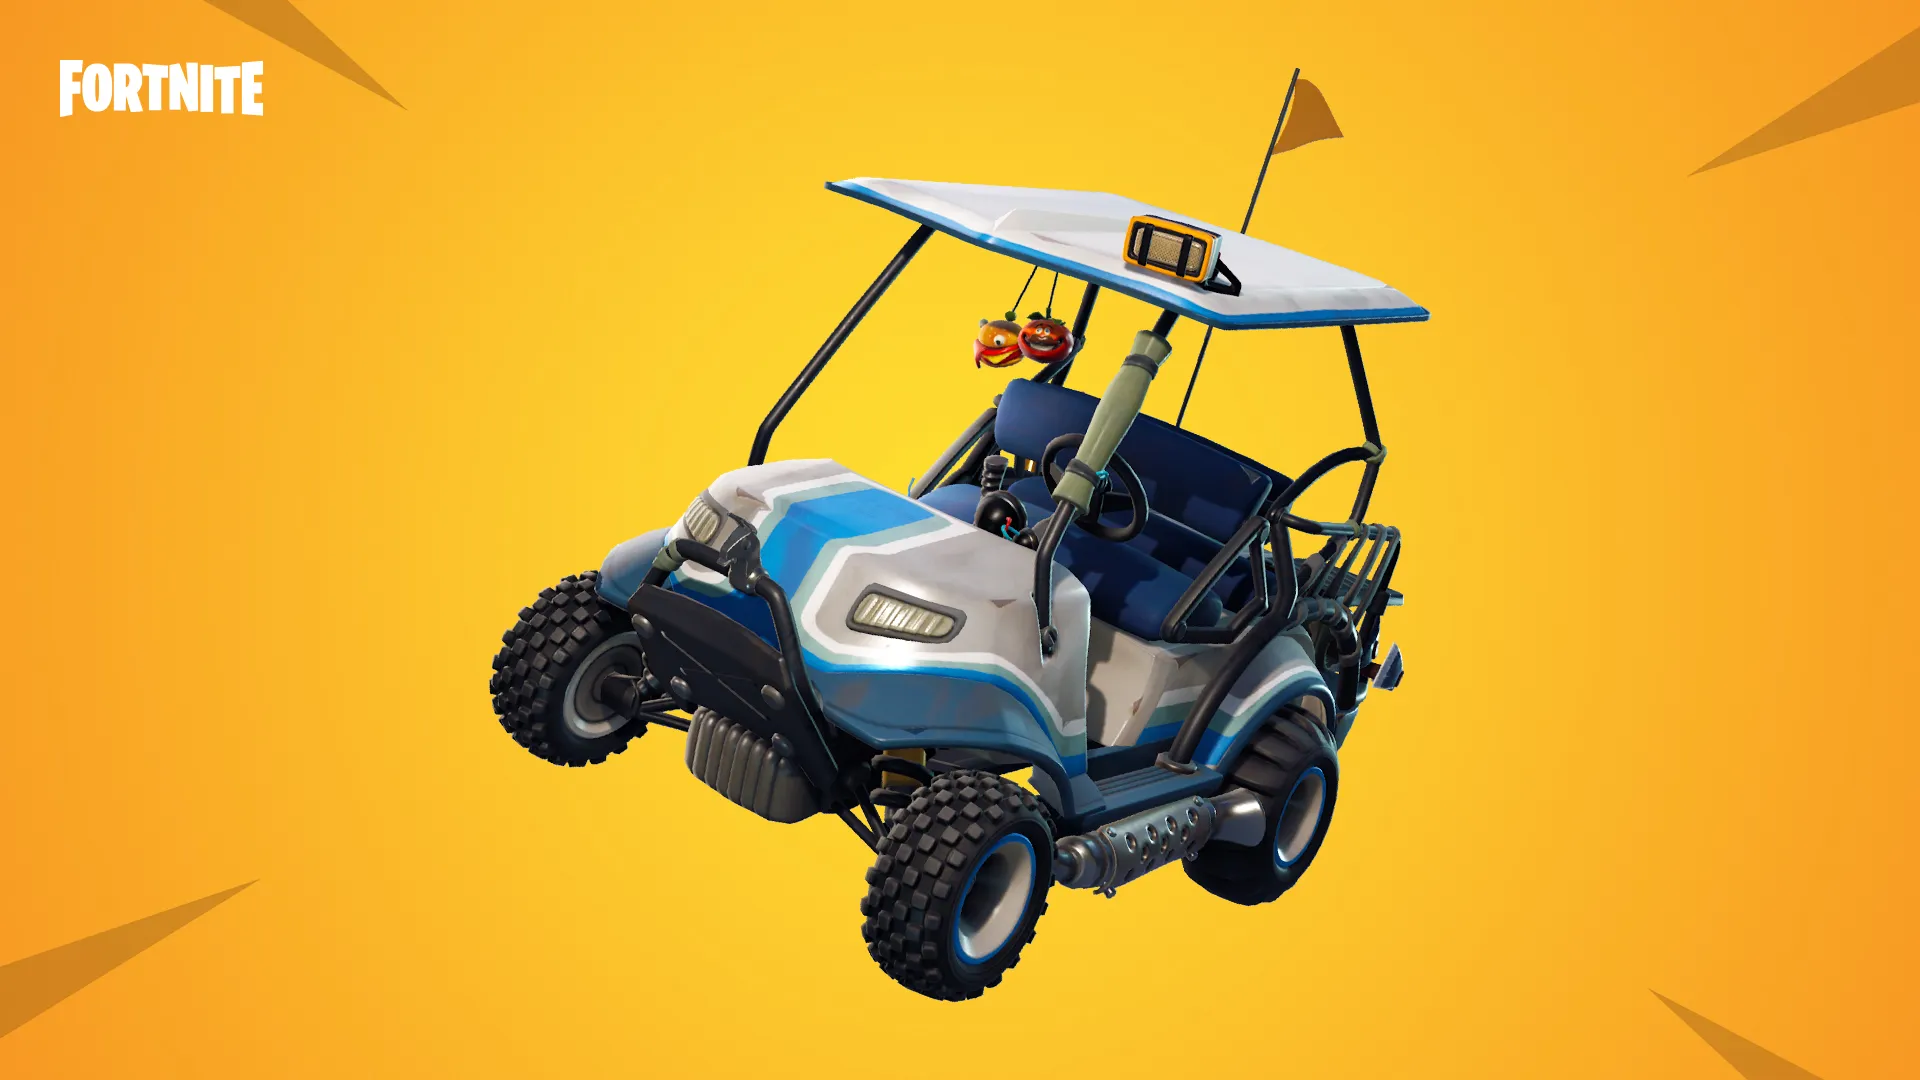 all terrain kart golf cart locations - golf in fortnite code